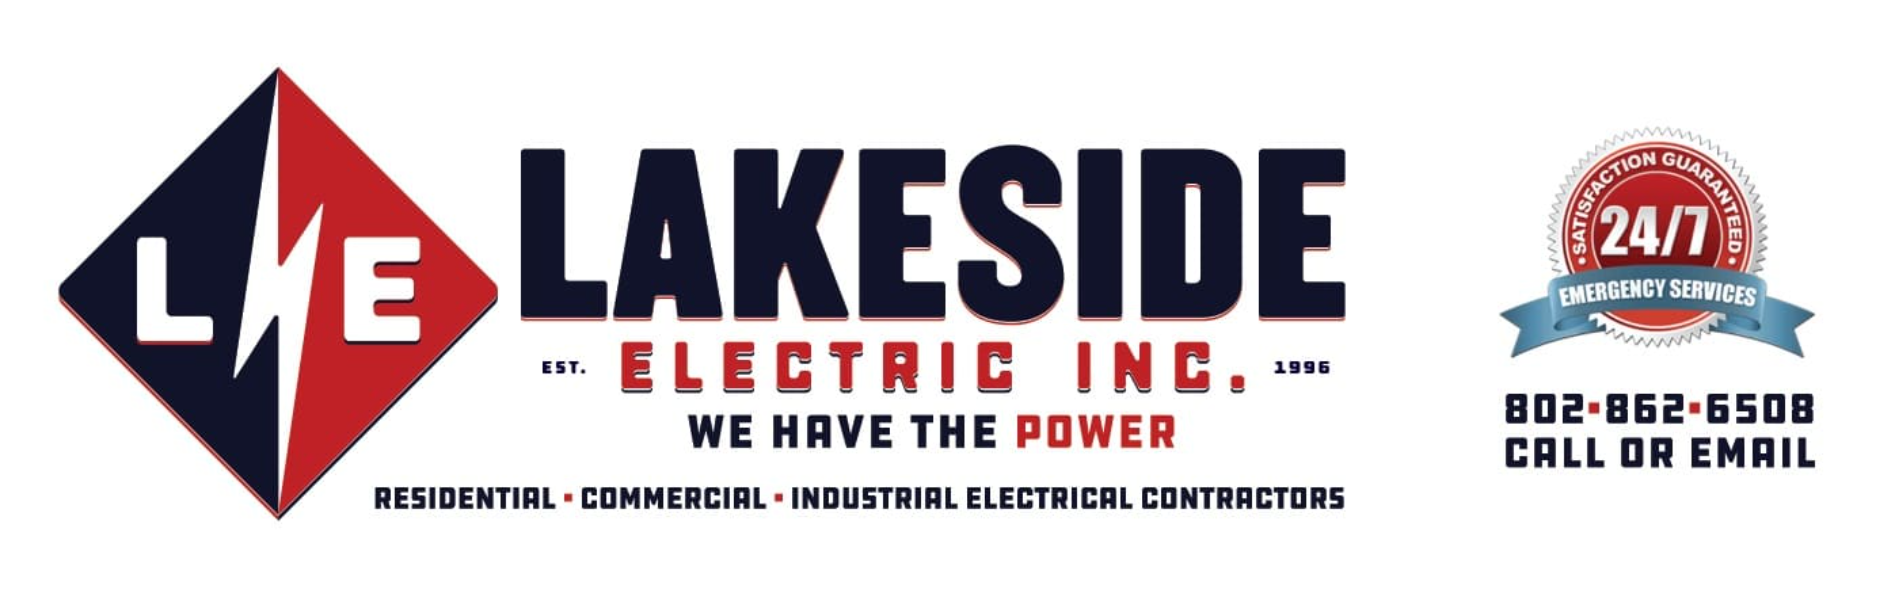 Lakeside Electric Inc.